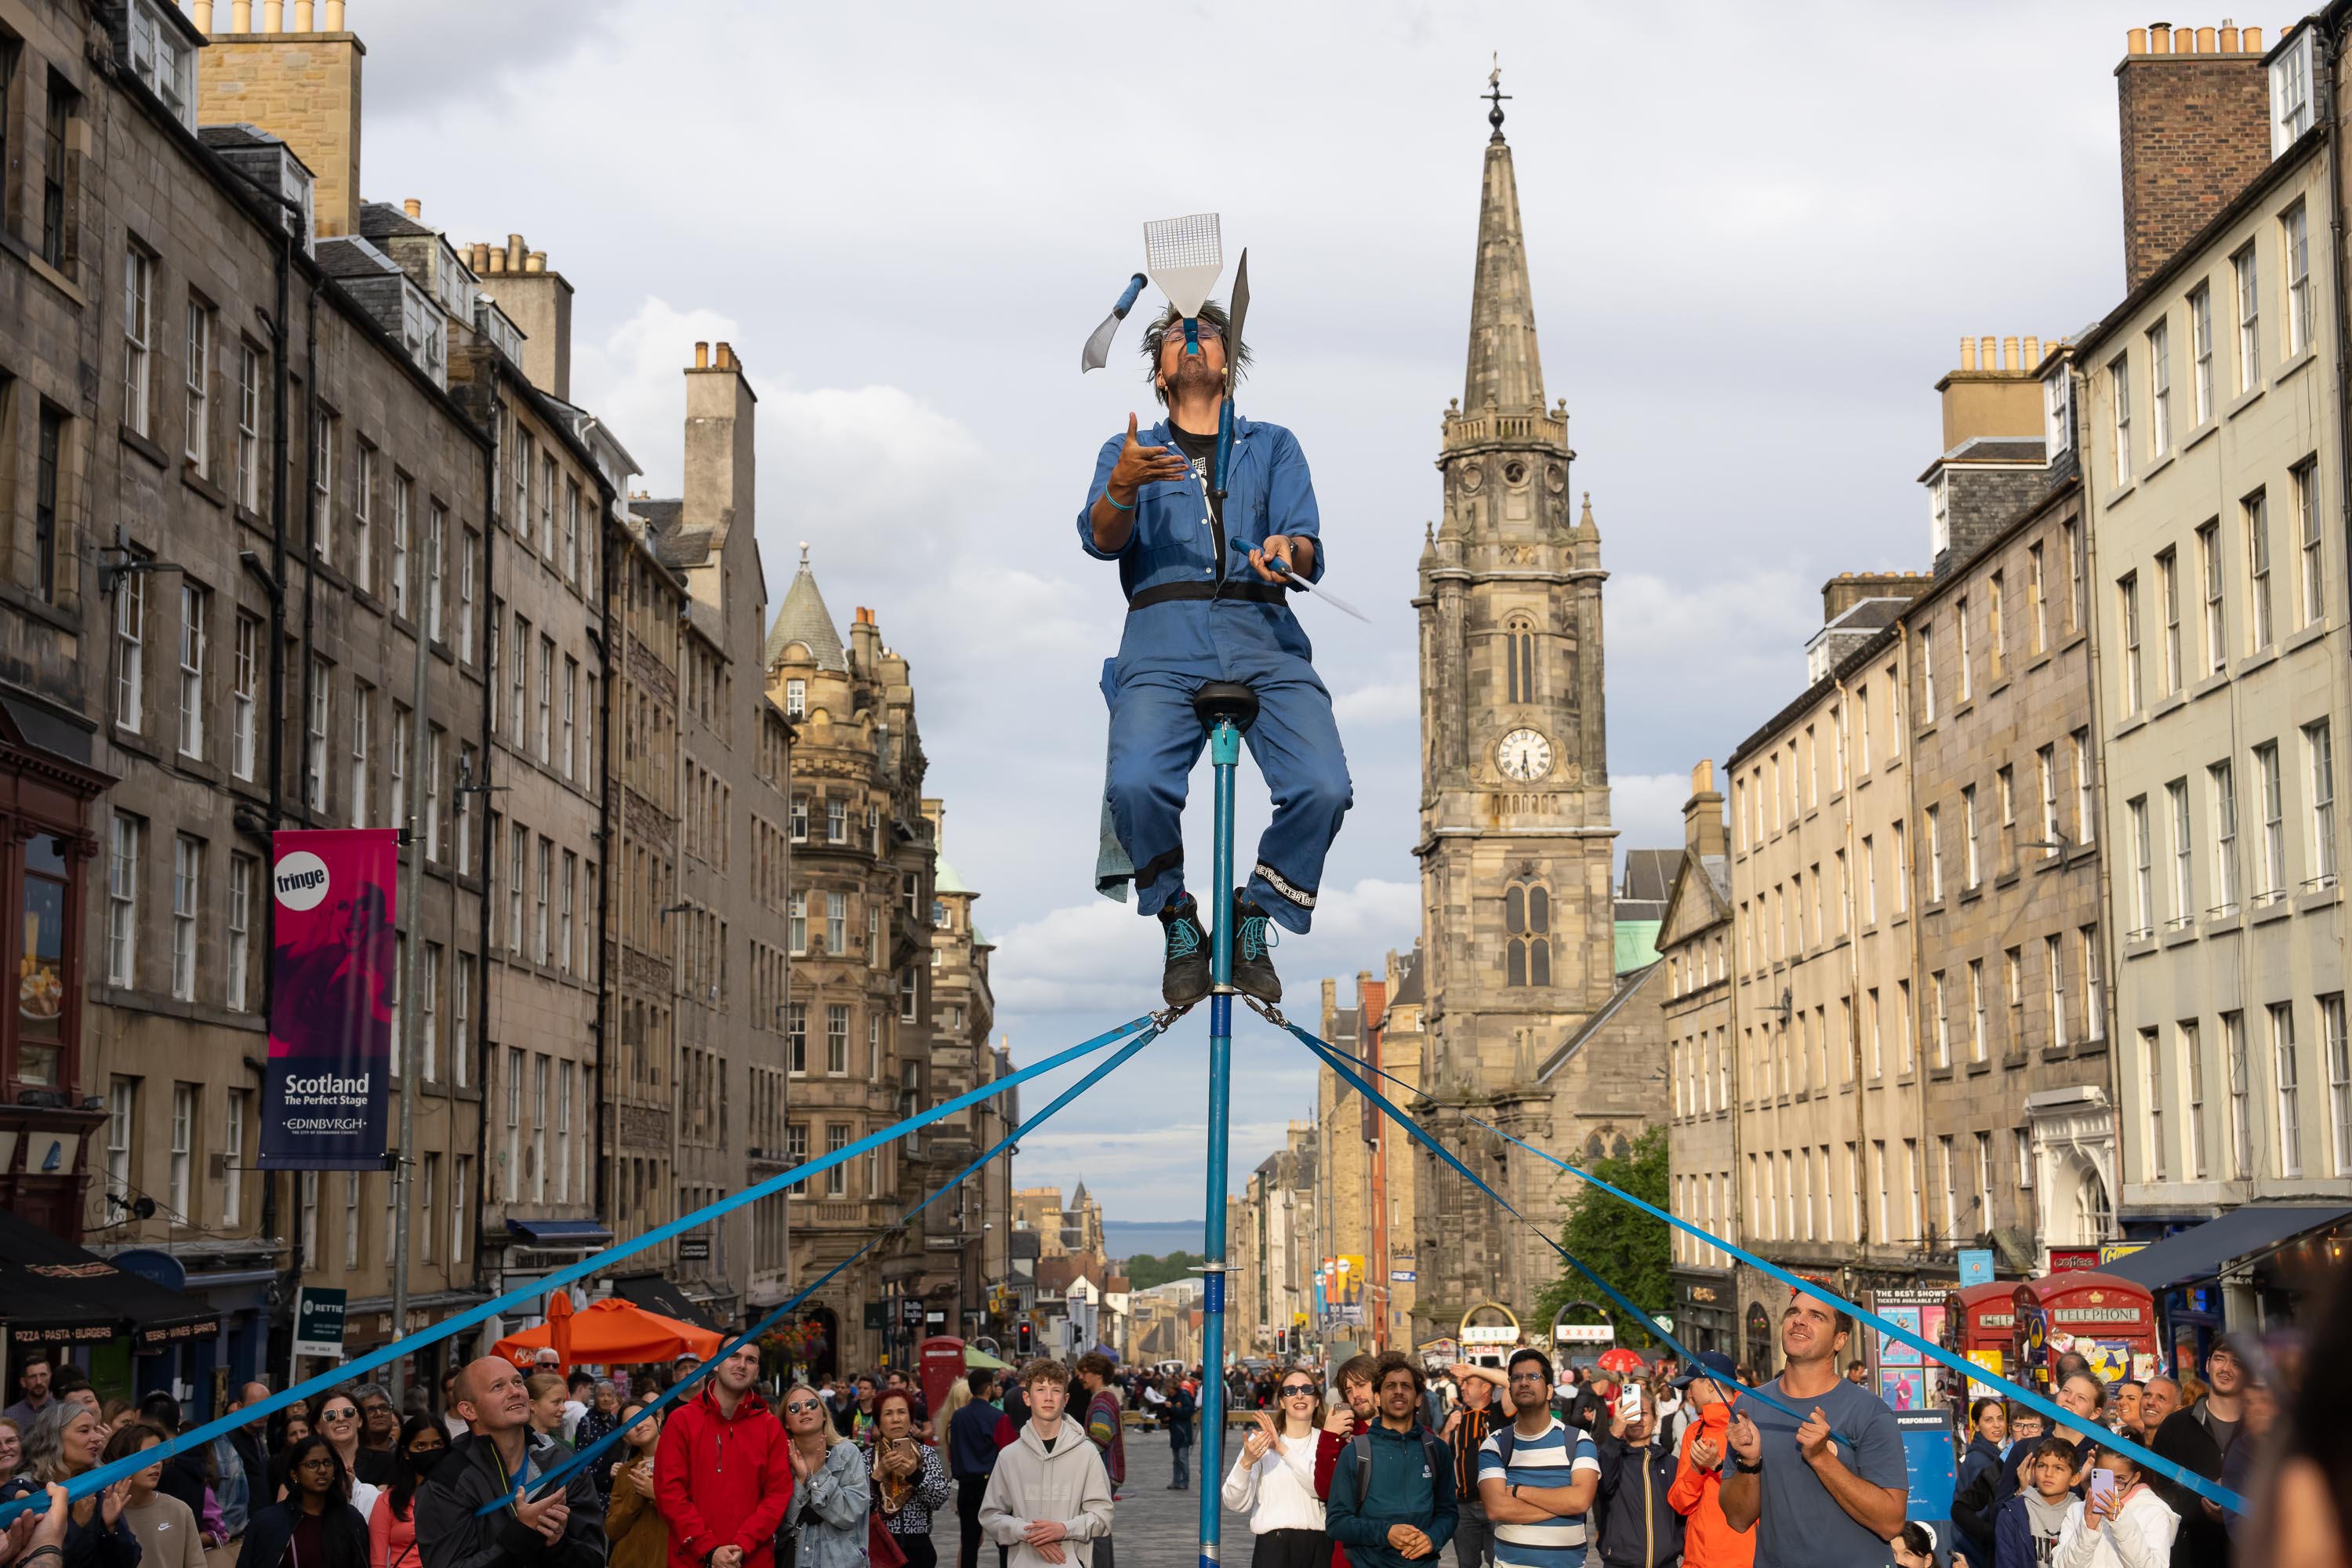 A common sight in Edinburgh during the Fringe Festival